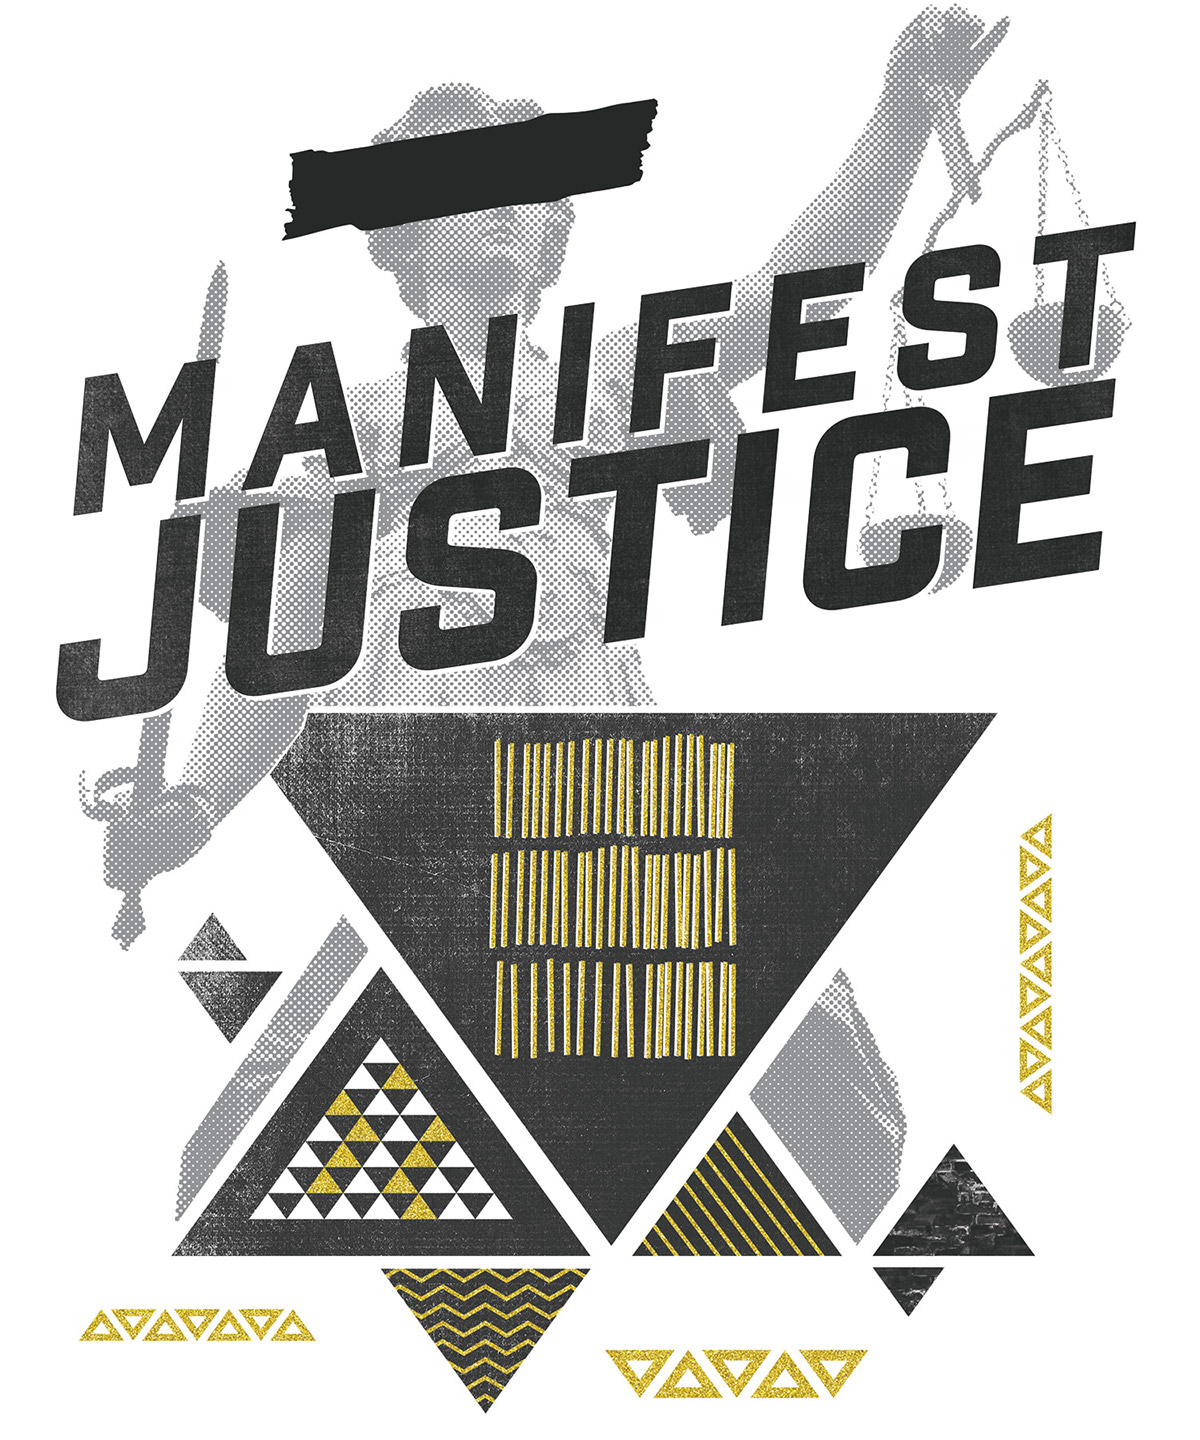 art activism community Los Angeles iconography Justice Manifest Exhibition 